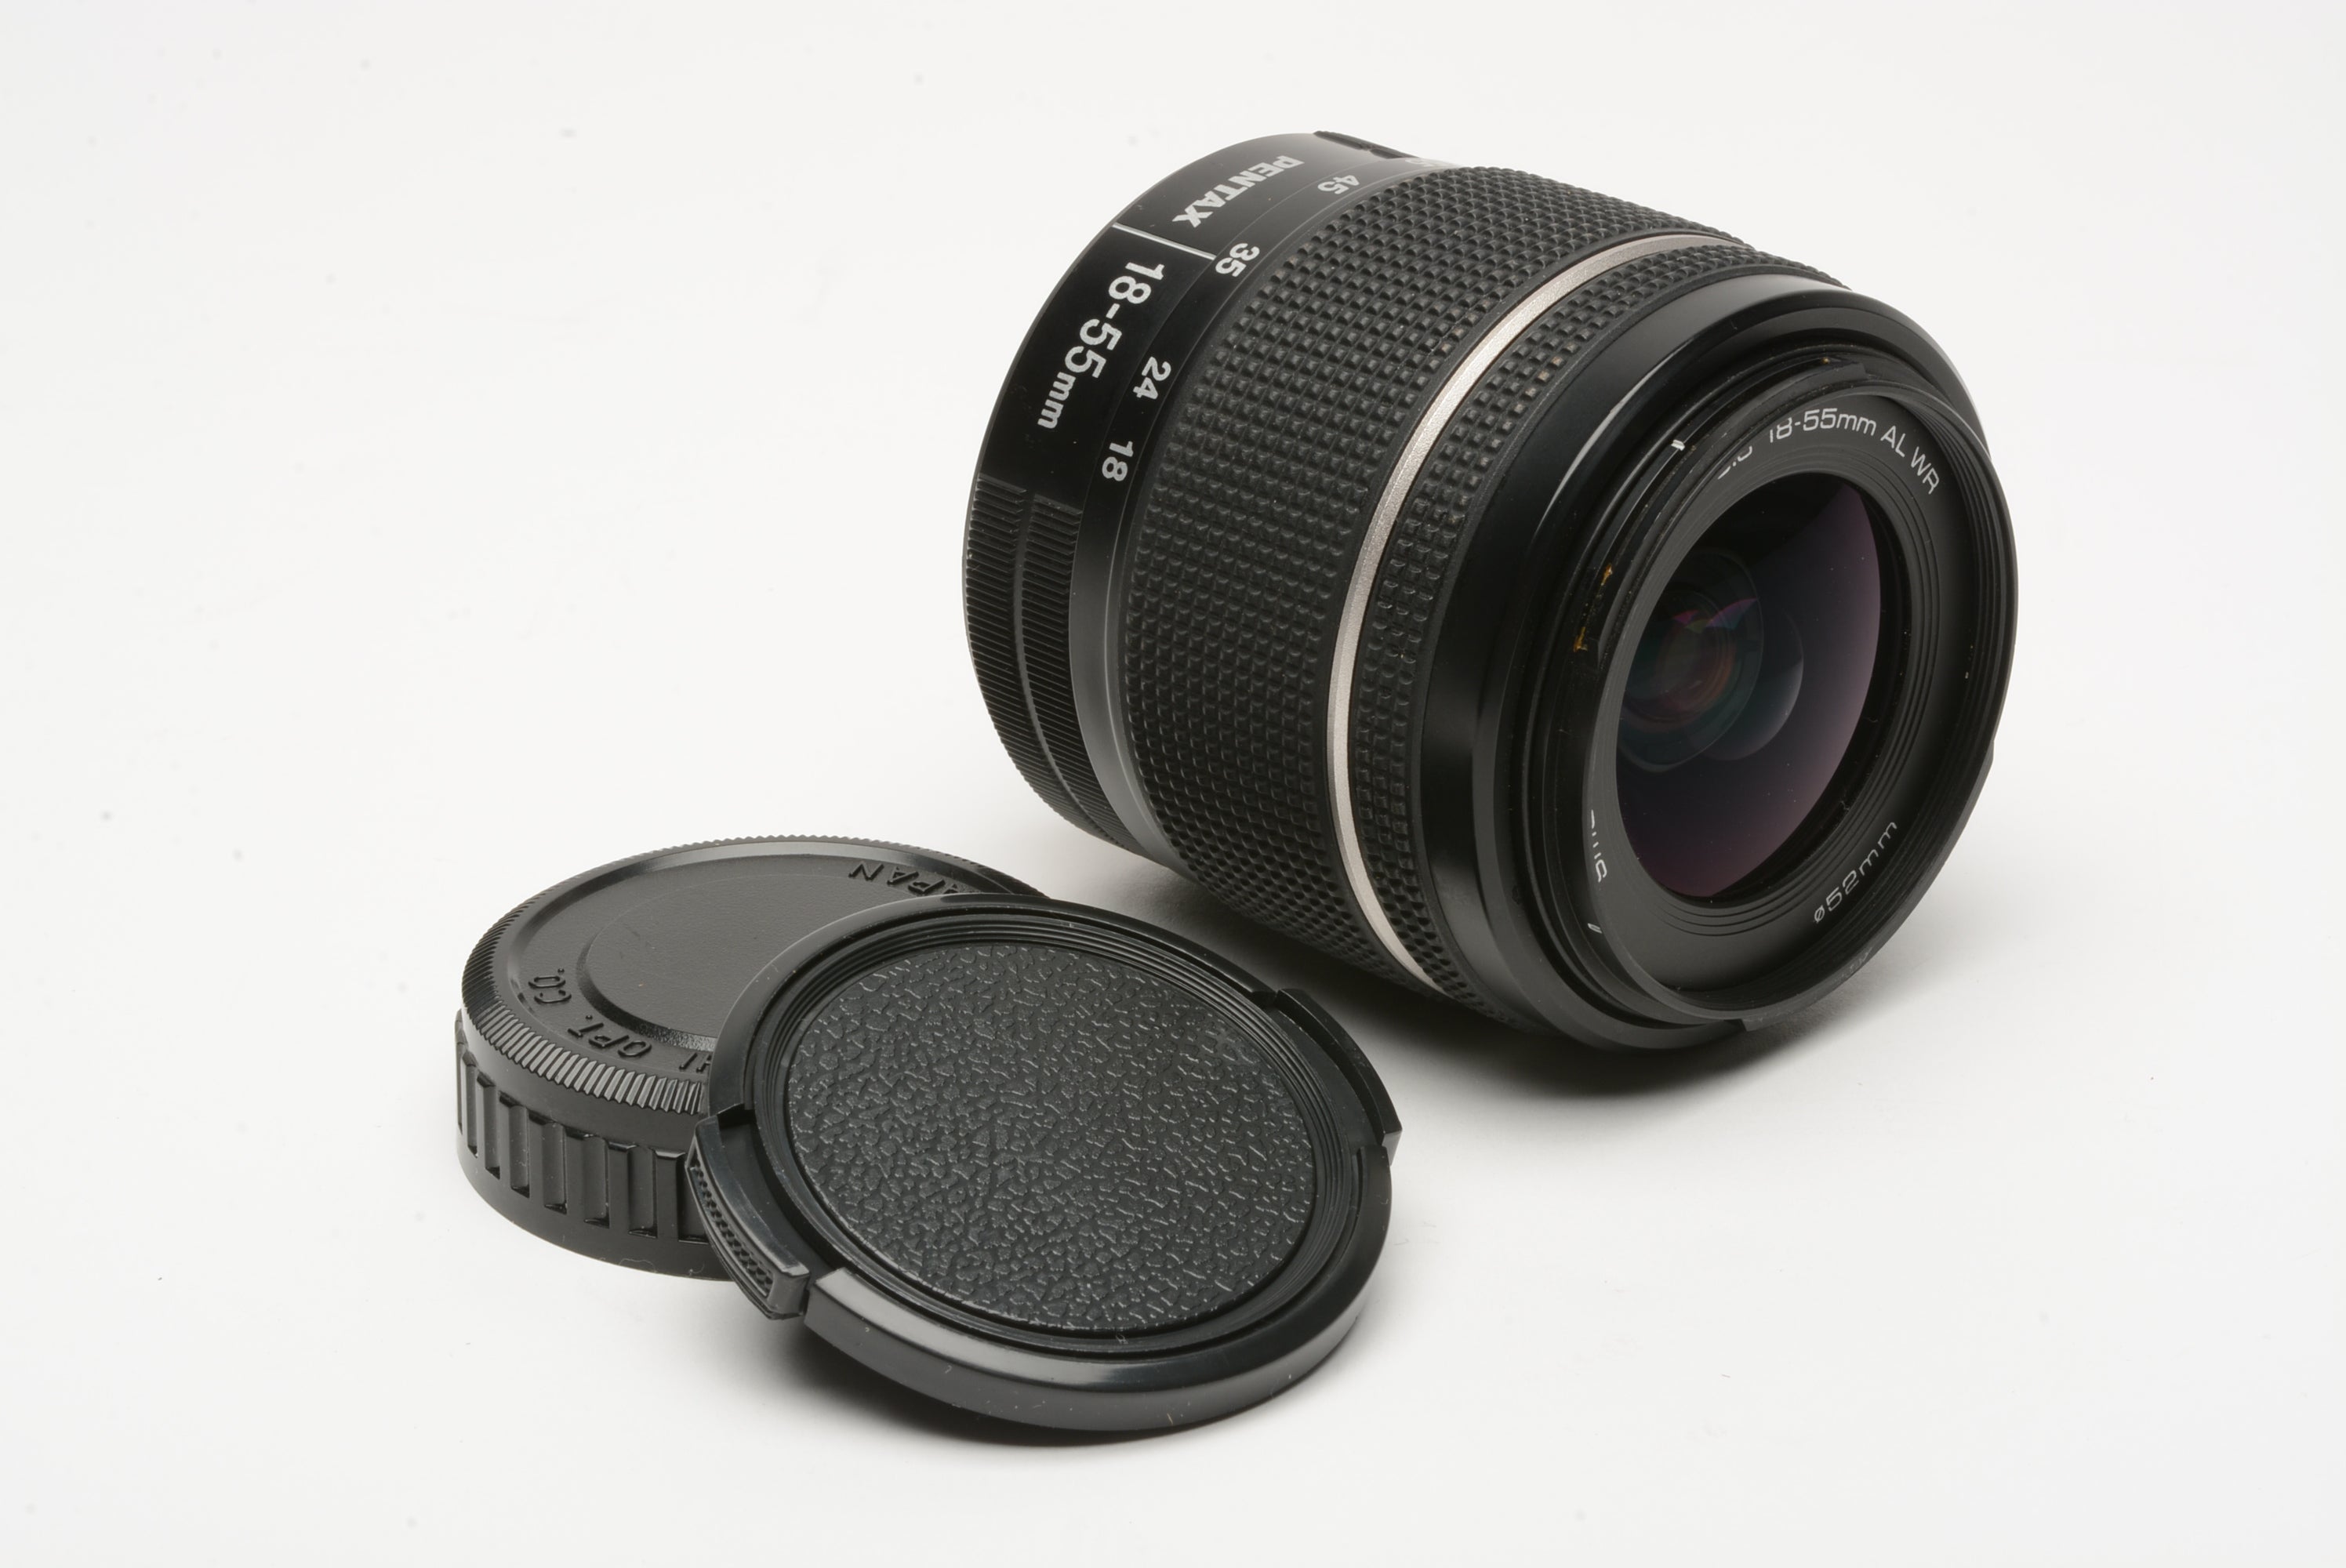 Pentax SMC DA L 18-55mm f3.5-5.6 AL WR compact zoom lens – RecycledPhoto